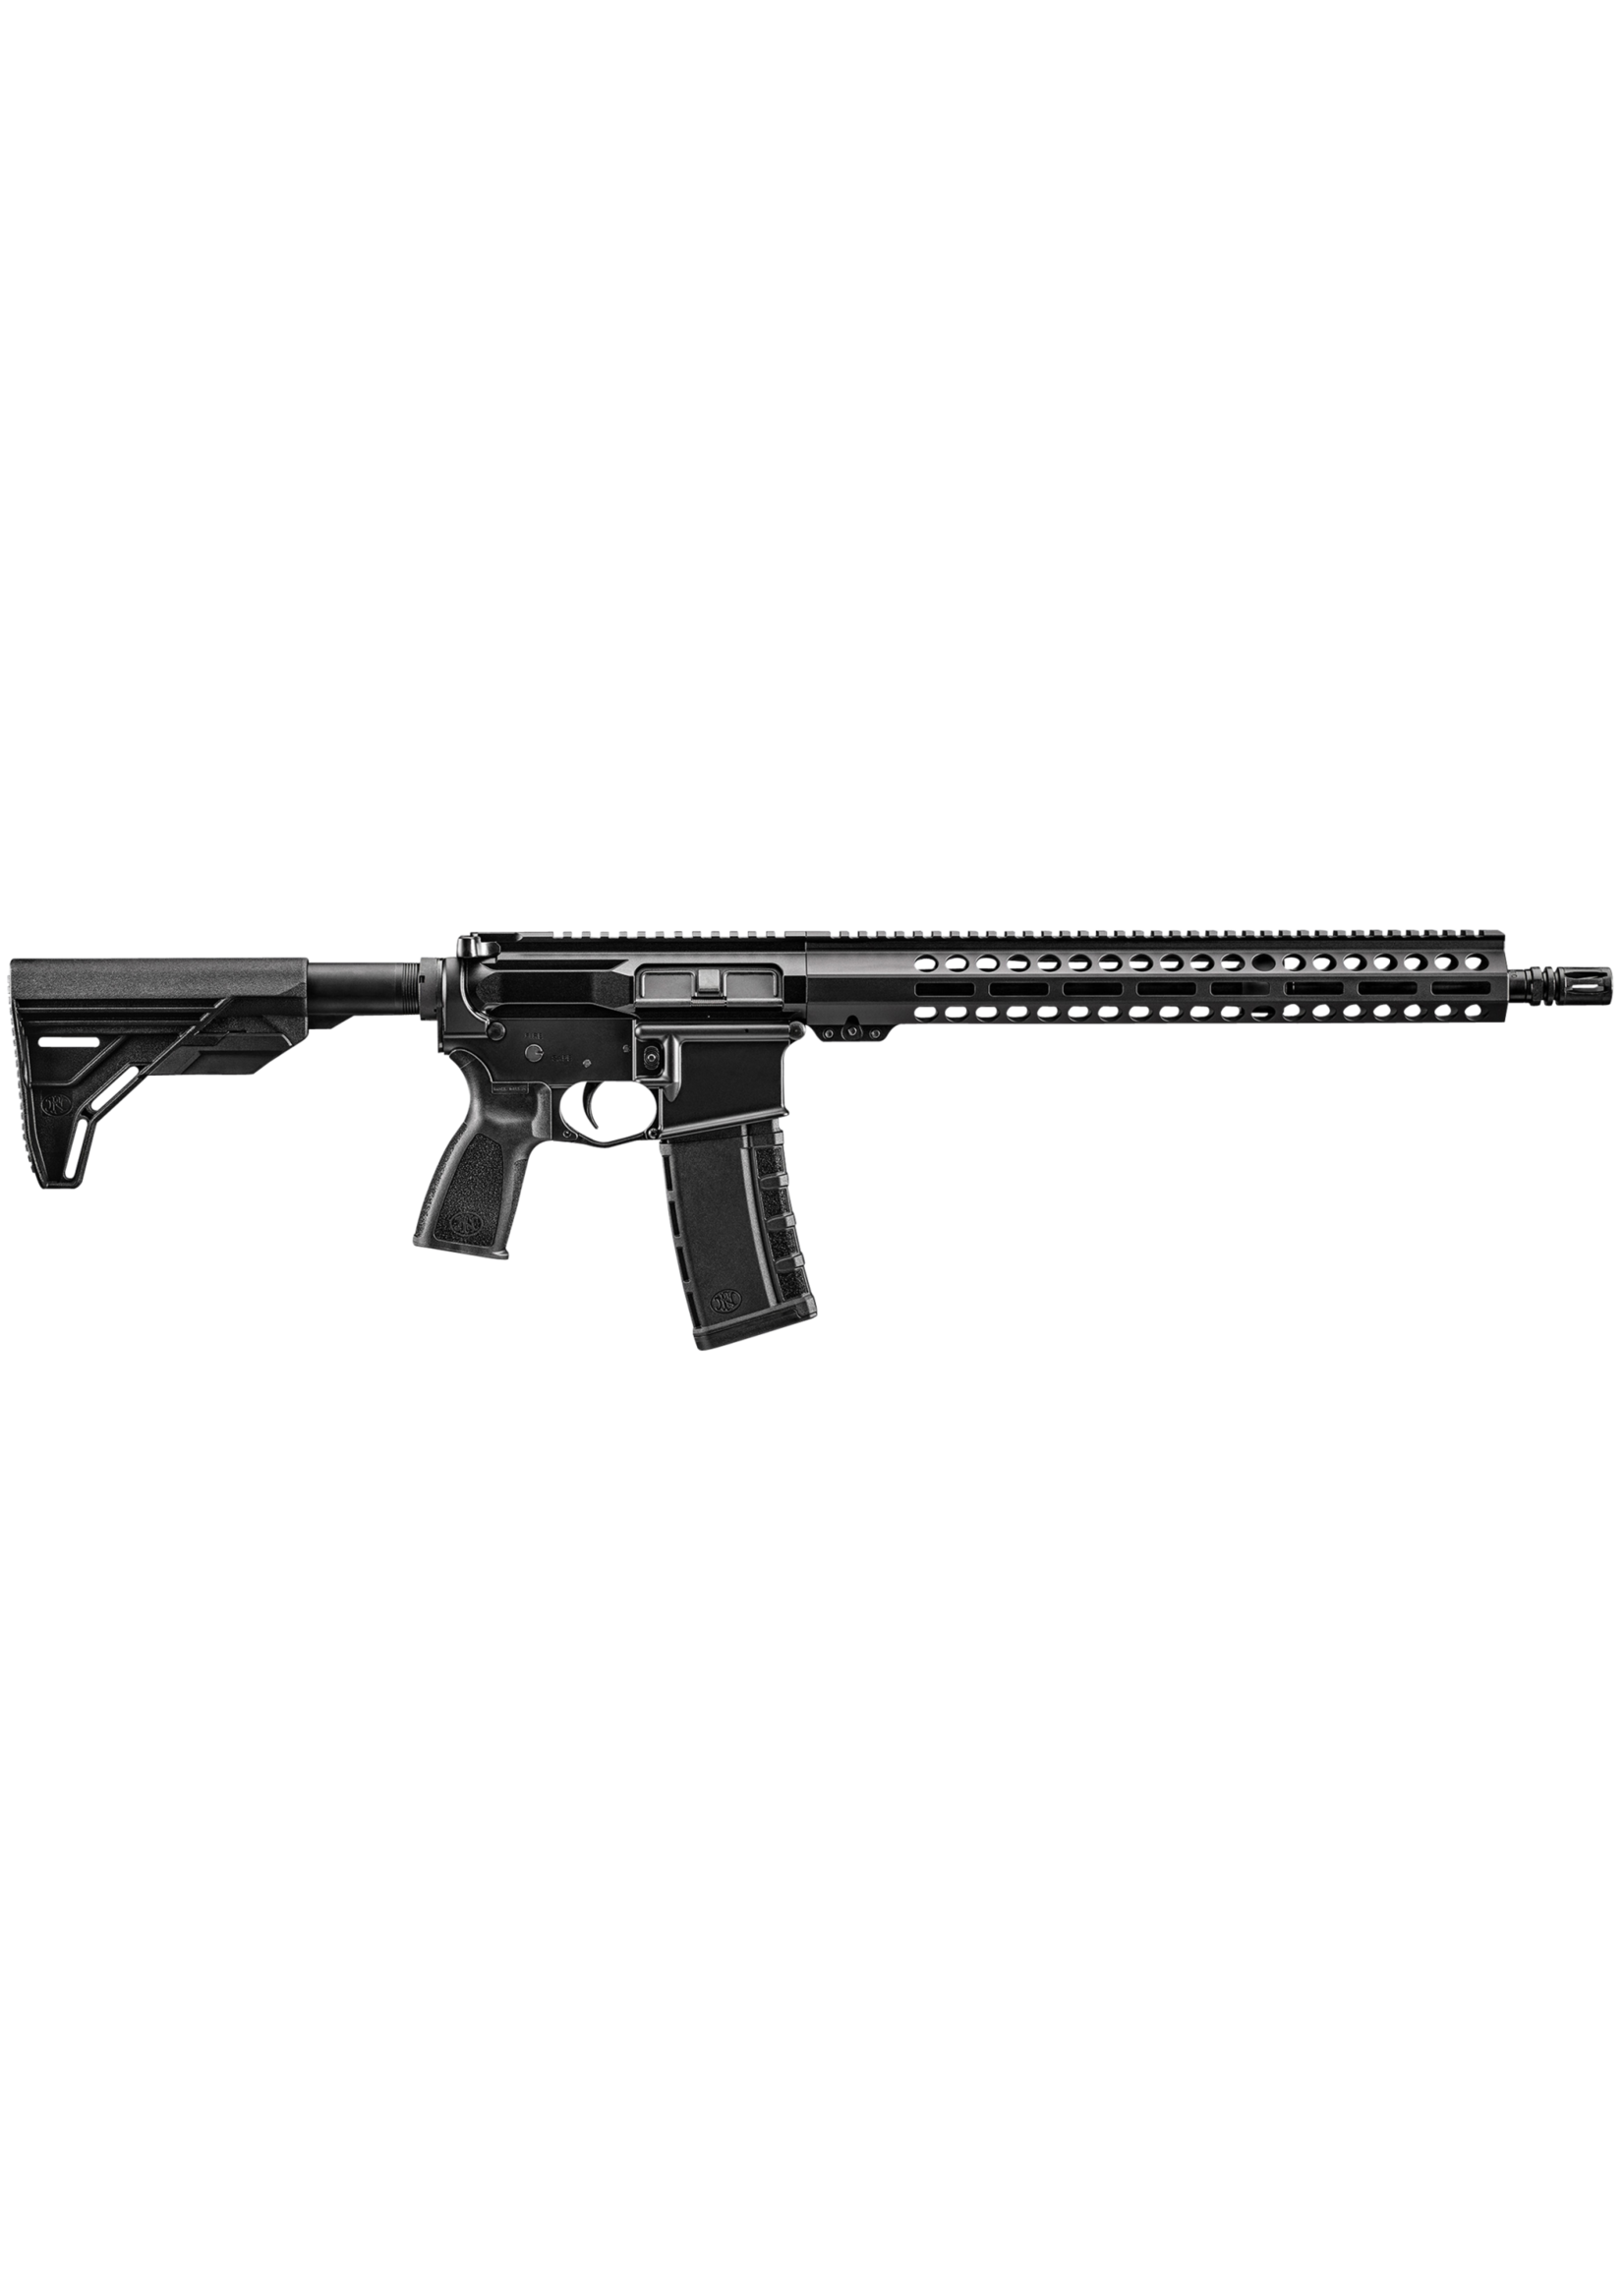 FN FN 36100740 FN 15 Guardian 5.56x45mm NATO 16" 30+1, Black, Slick-Side Upper Rec, OEM 6 Position Stock & Grip 15" M-LOK Handguard